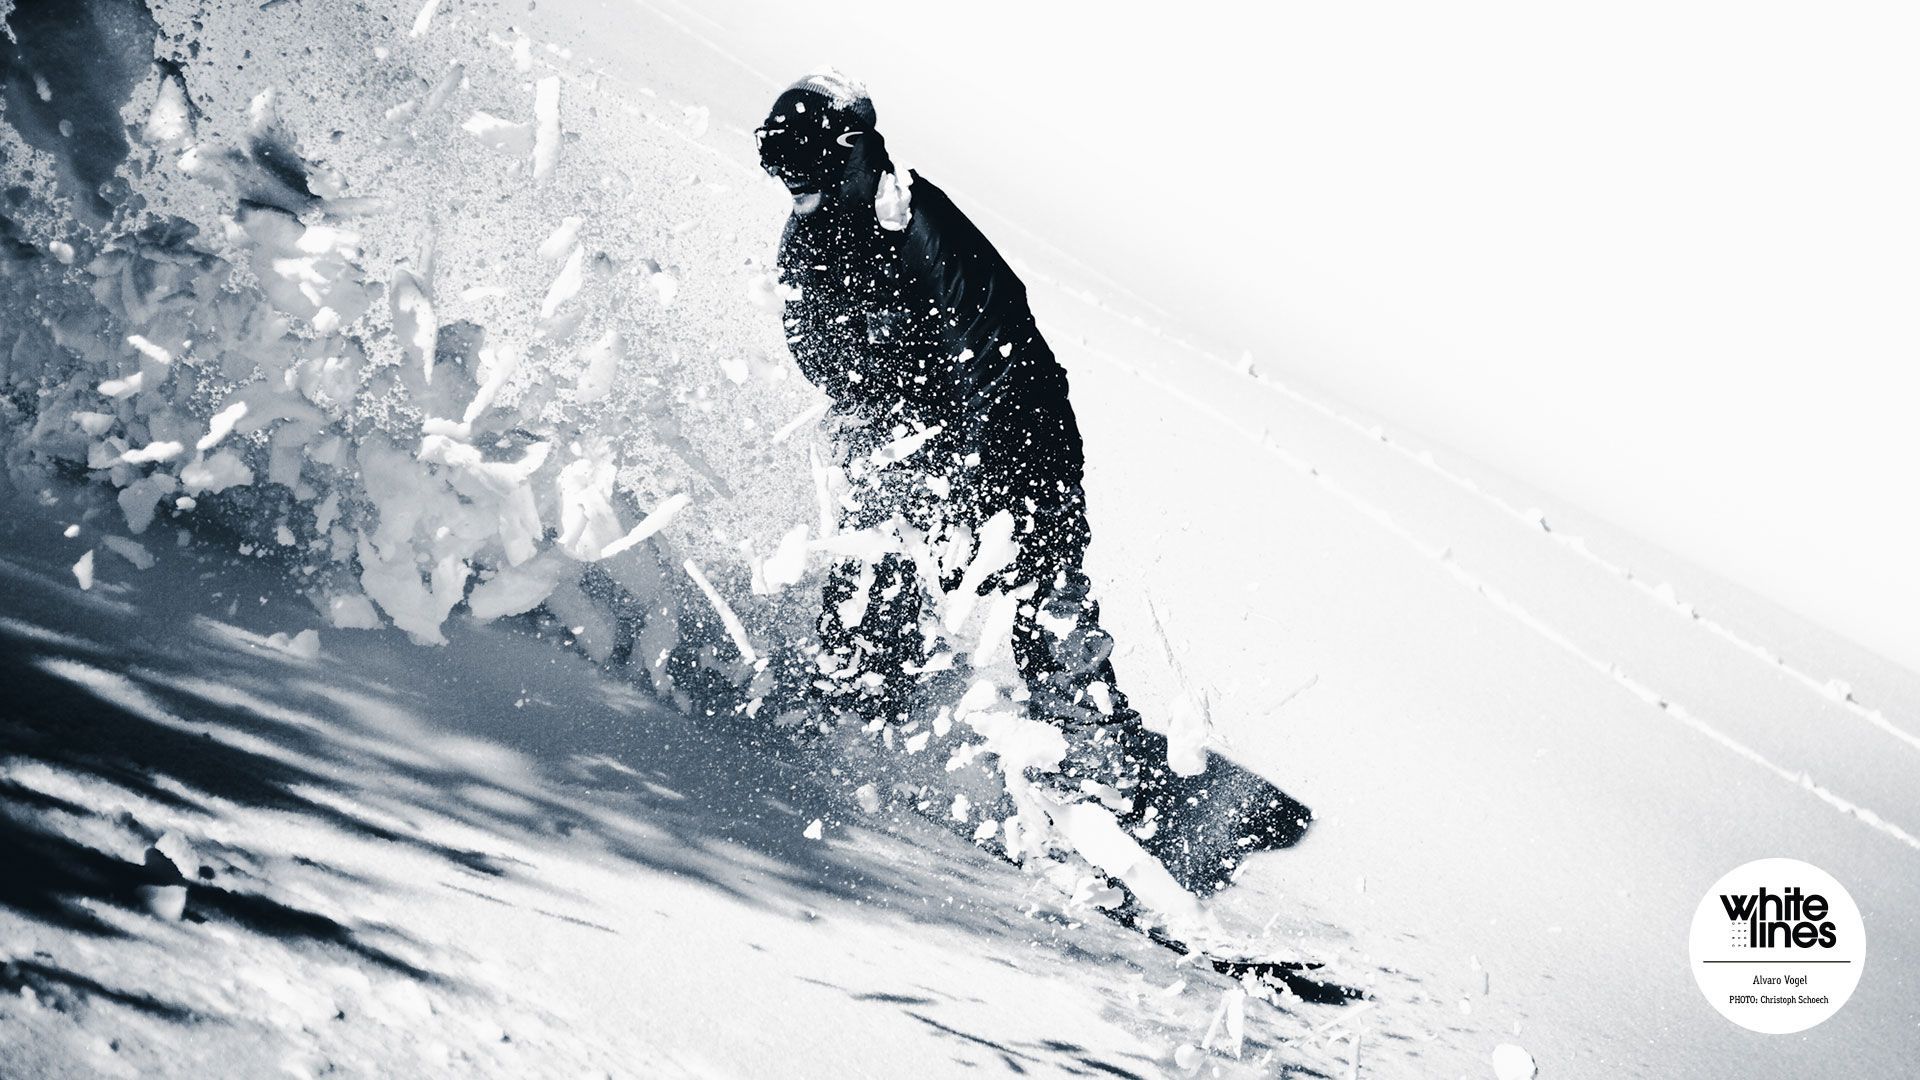 20 sick black and white snowboard shots - Whitelines Snowboarding